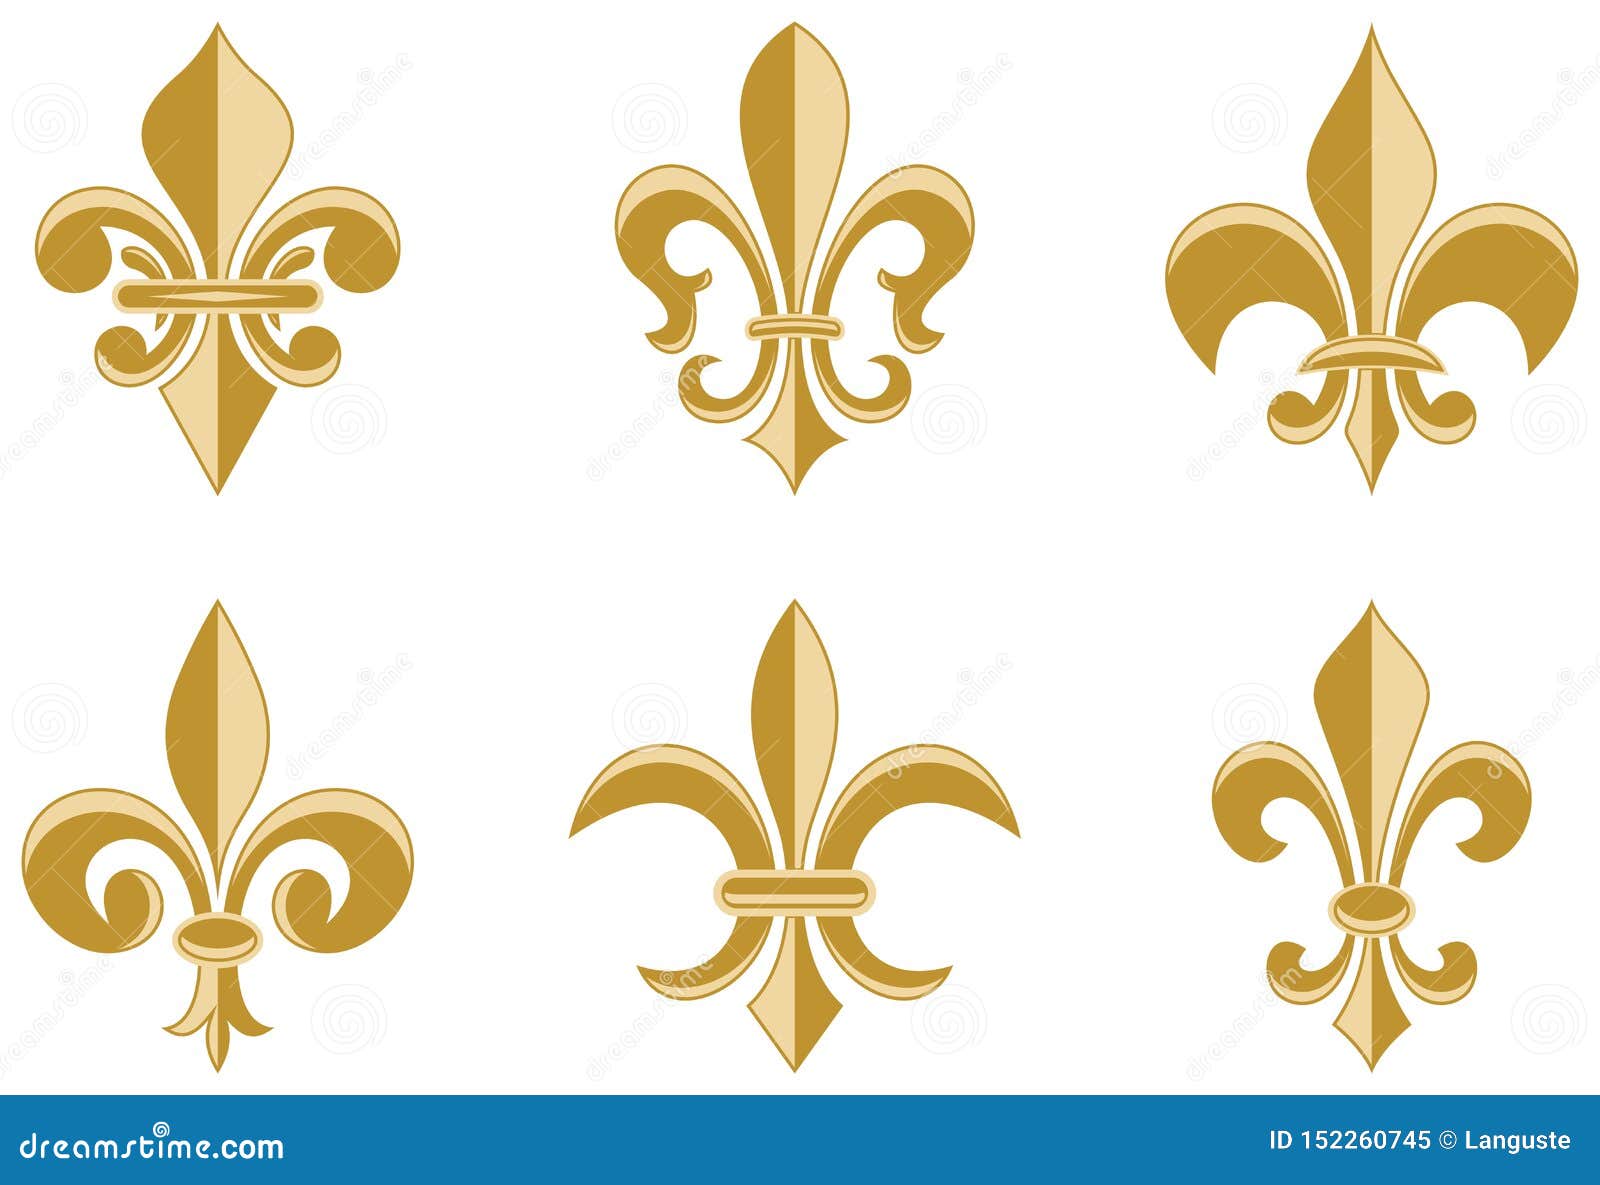 Golden Fleur-de-lis Symbols As Vector. Stock Vector - Illustration of ...